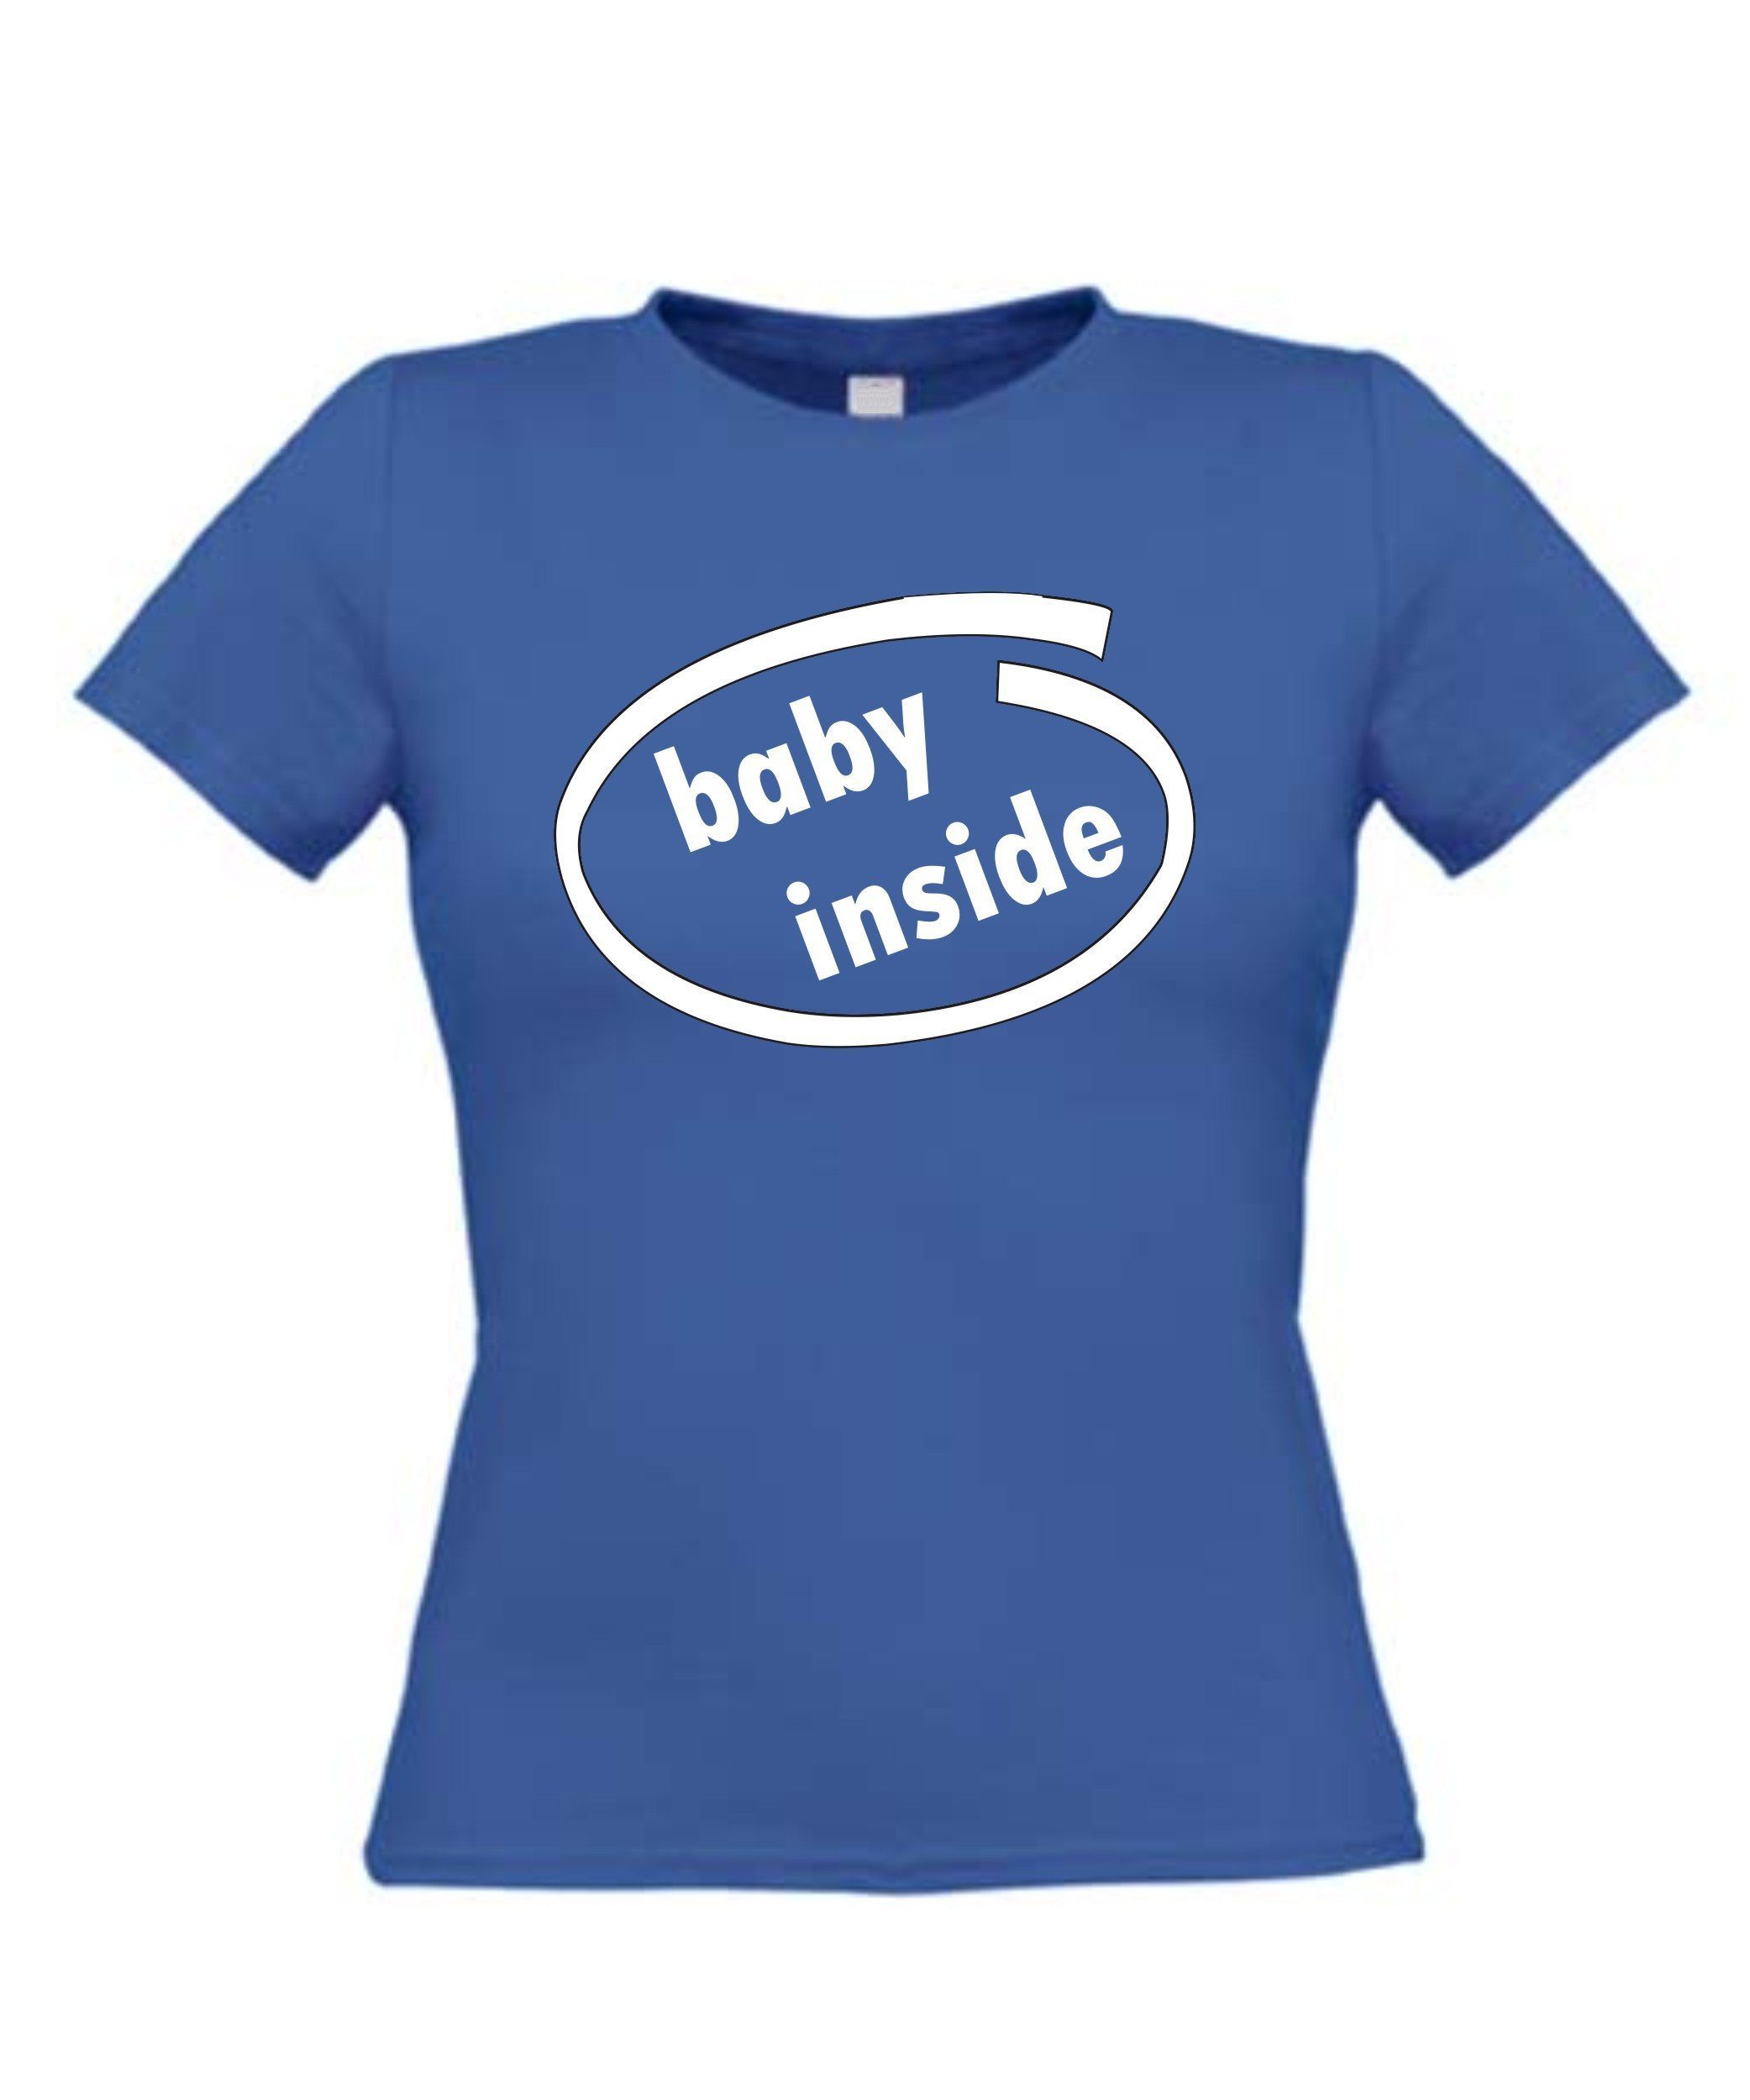 Baby inside t-shirt